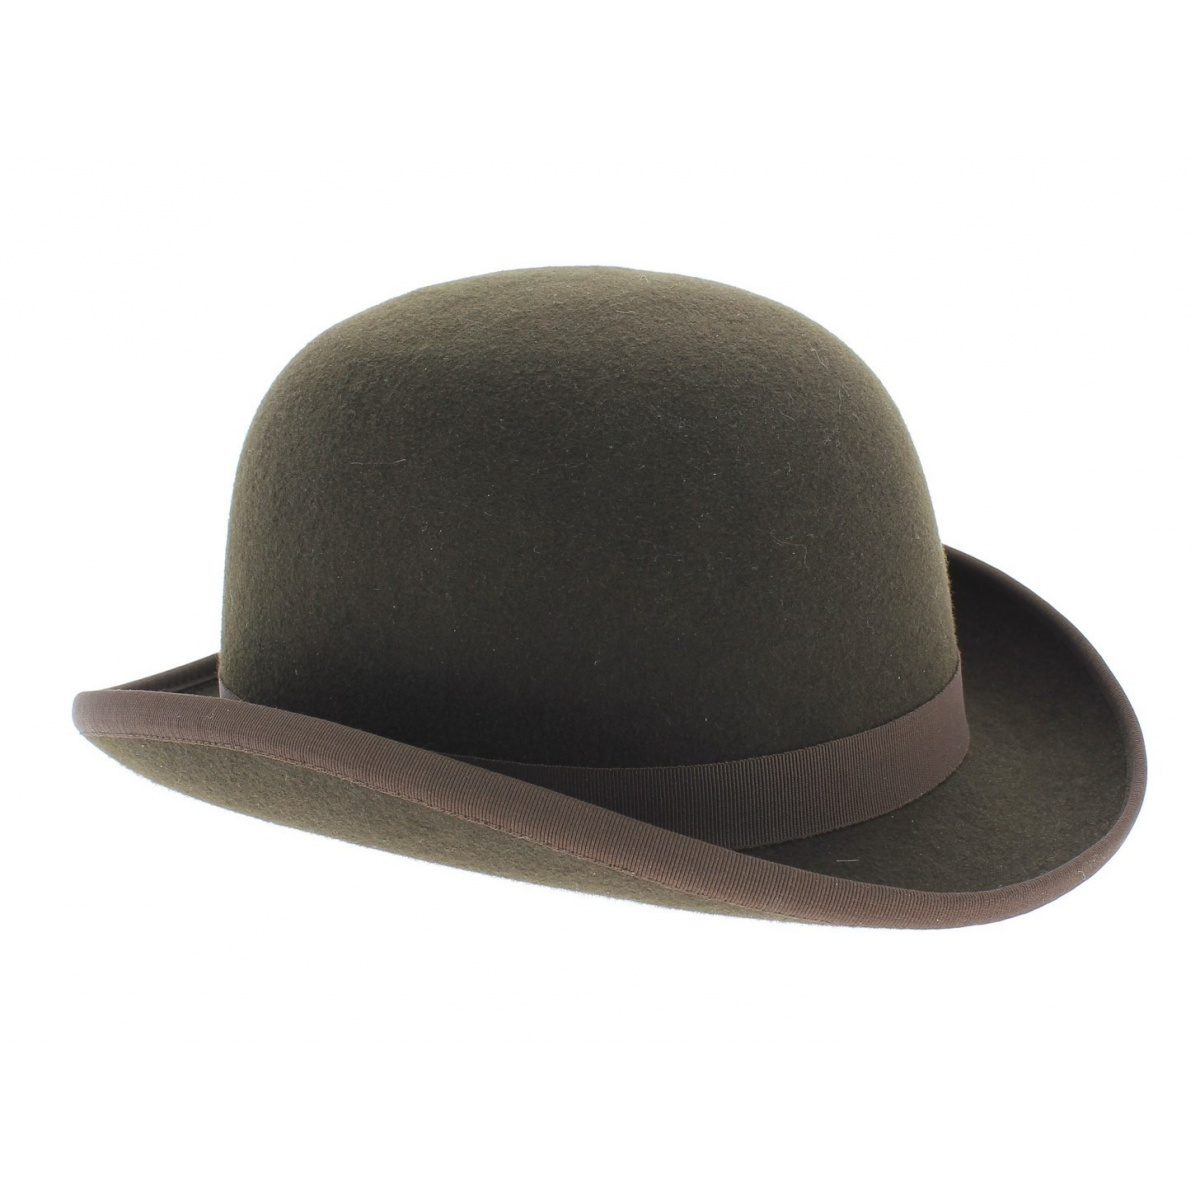 Bowler hat. Ковбойская шляпа референс. Brown hat. Felt hat.